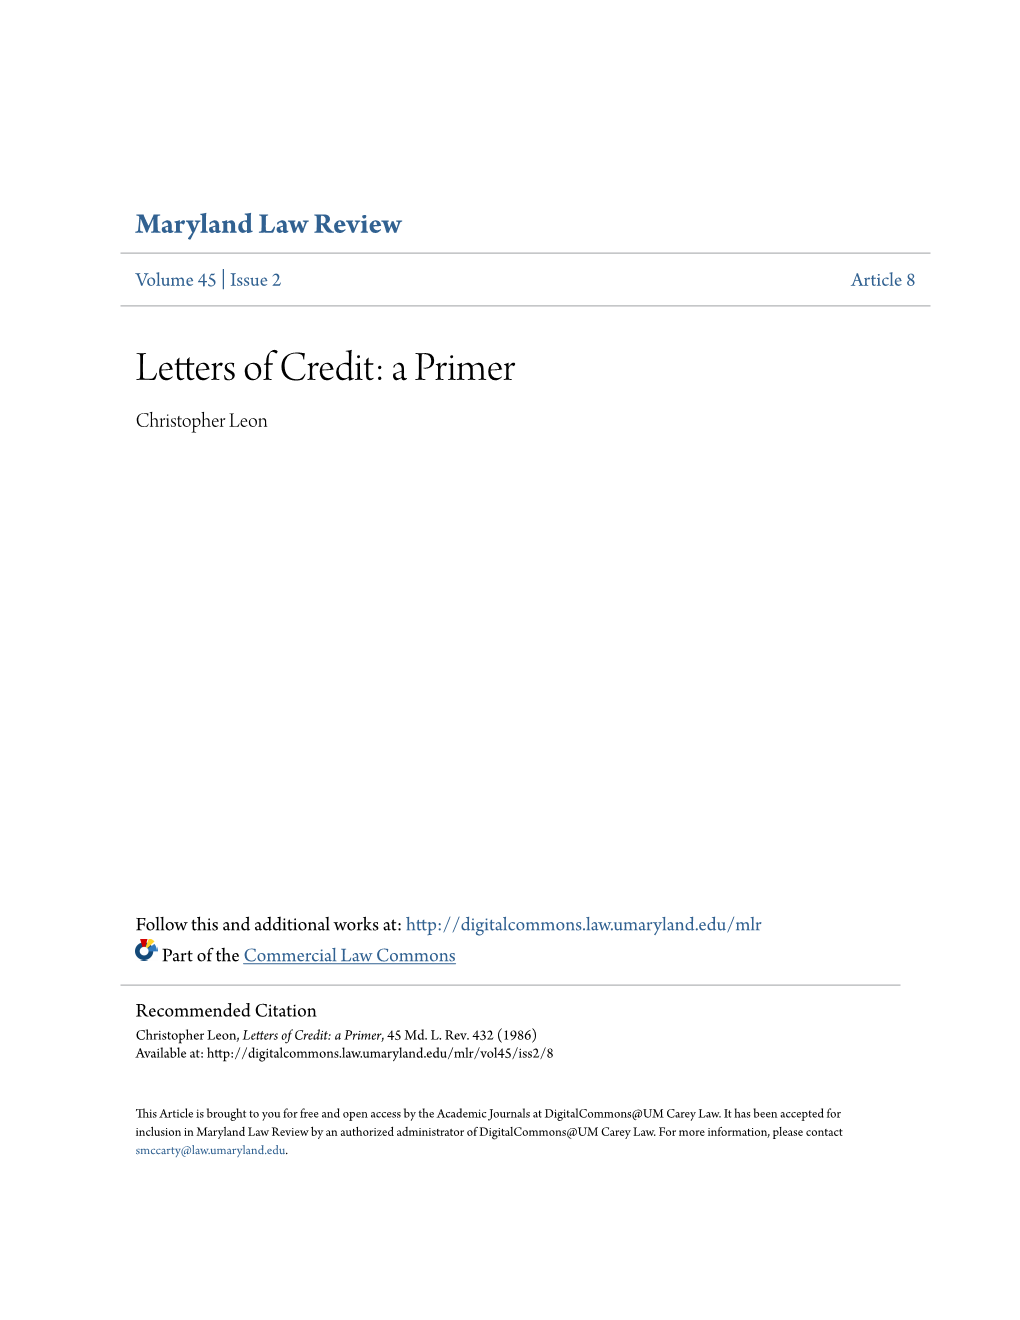 Letters of Credit: a Primer Christopher Leon